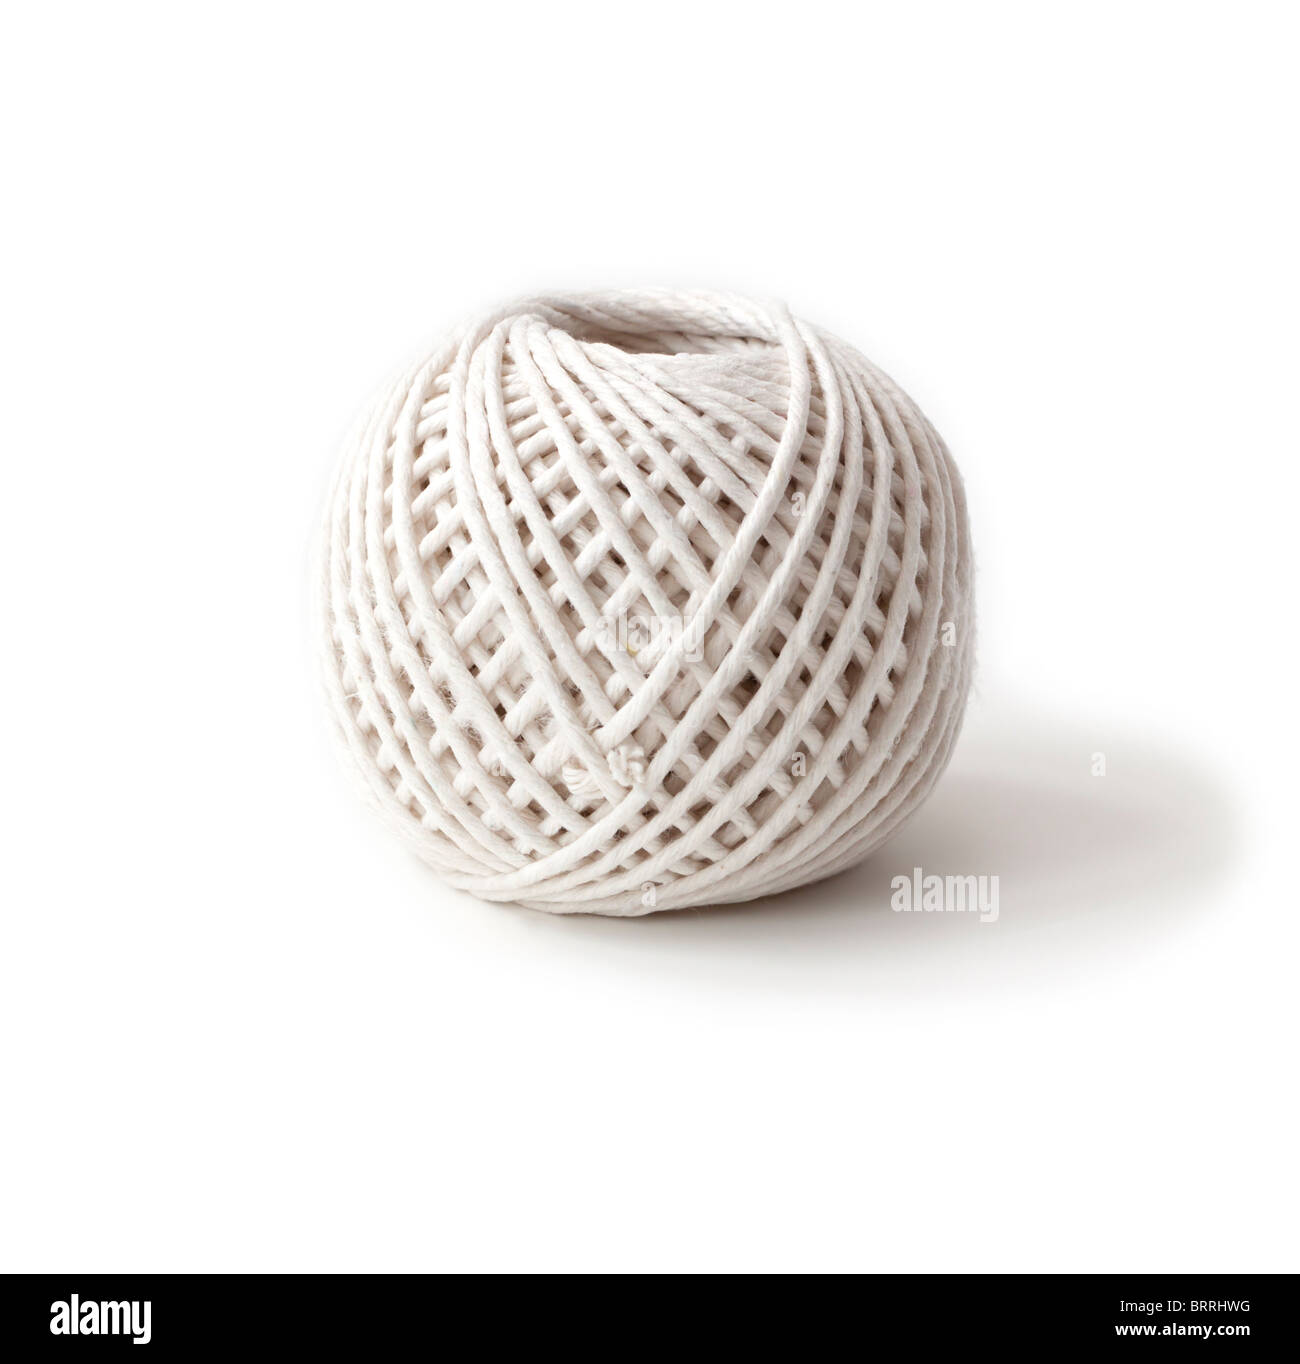 Ball of white string on a white background Stock Photo